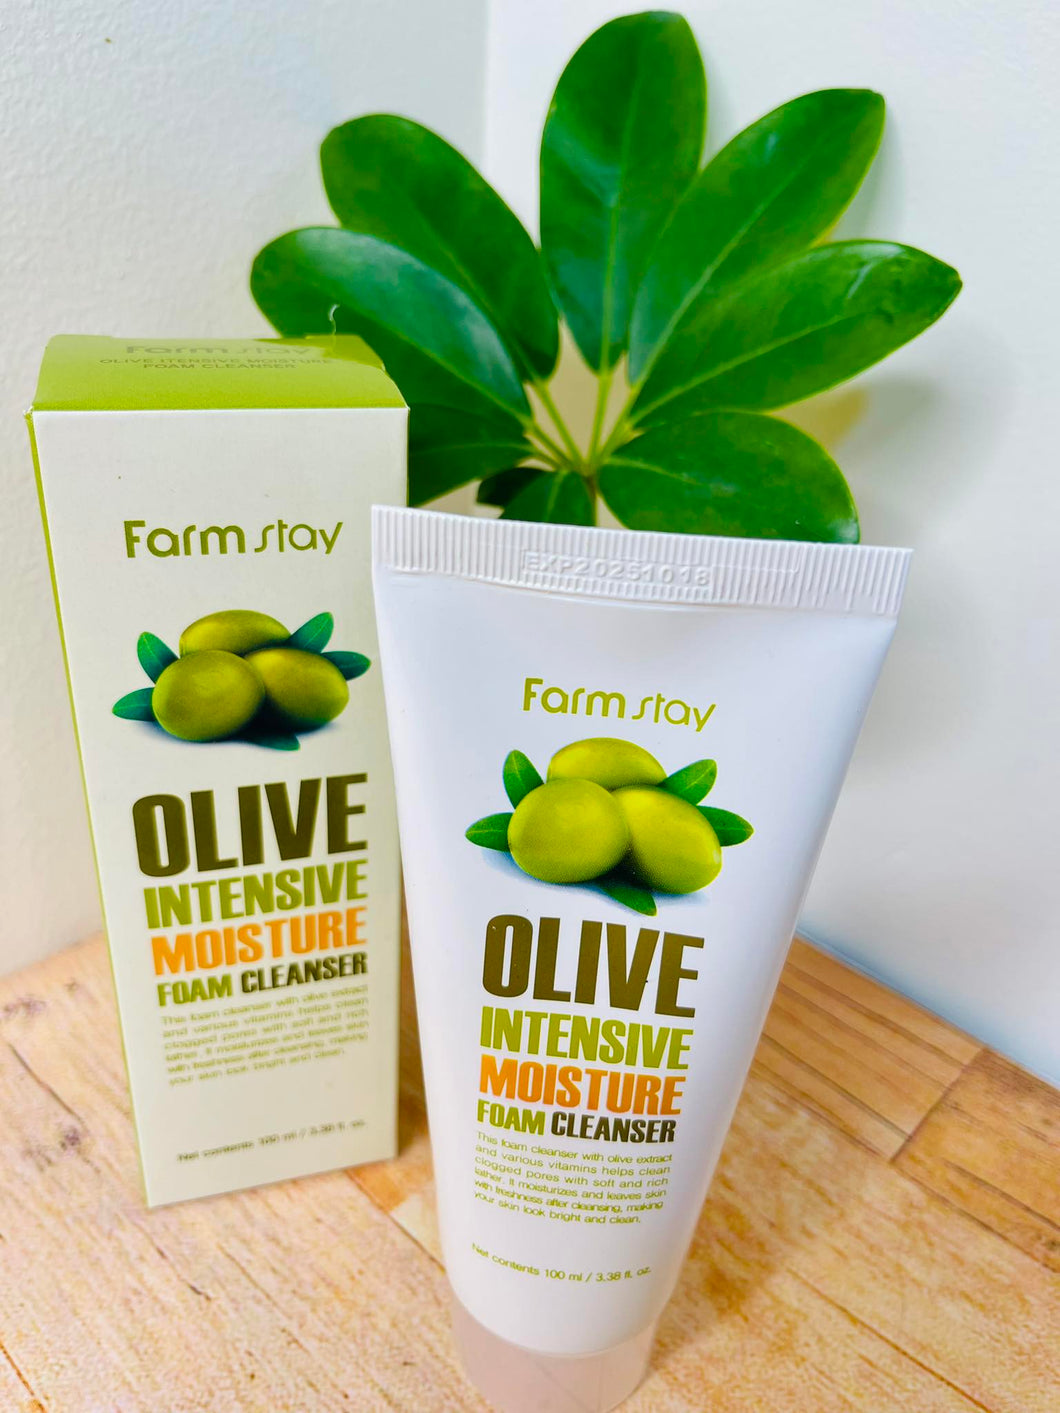 Farm Stay olive foam cleanser instant moisturizer